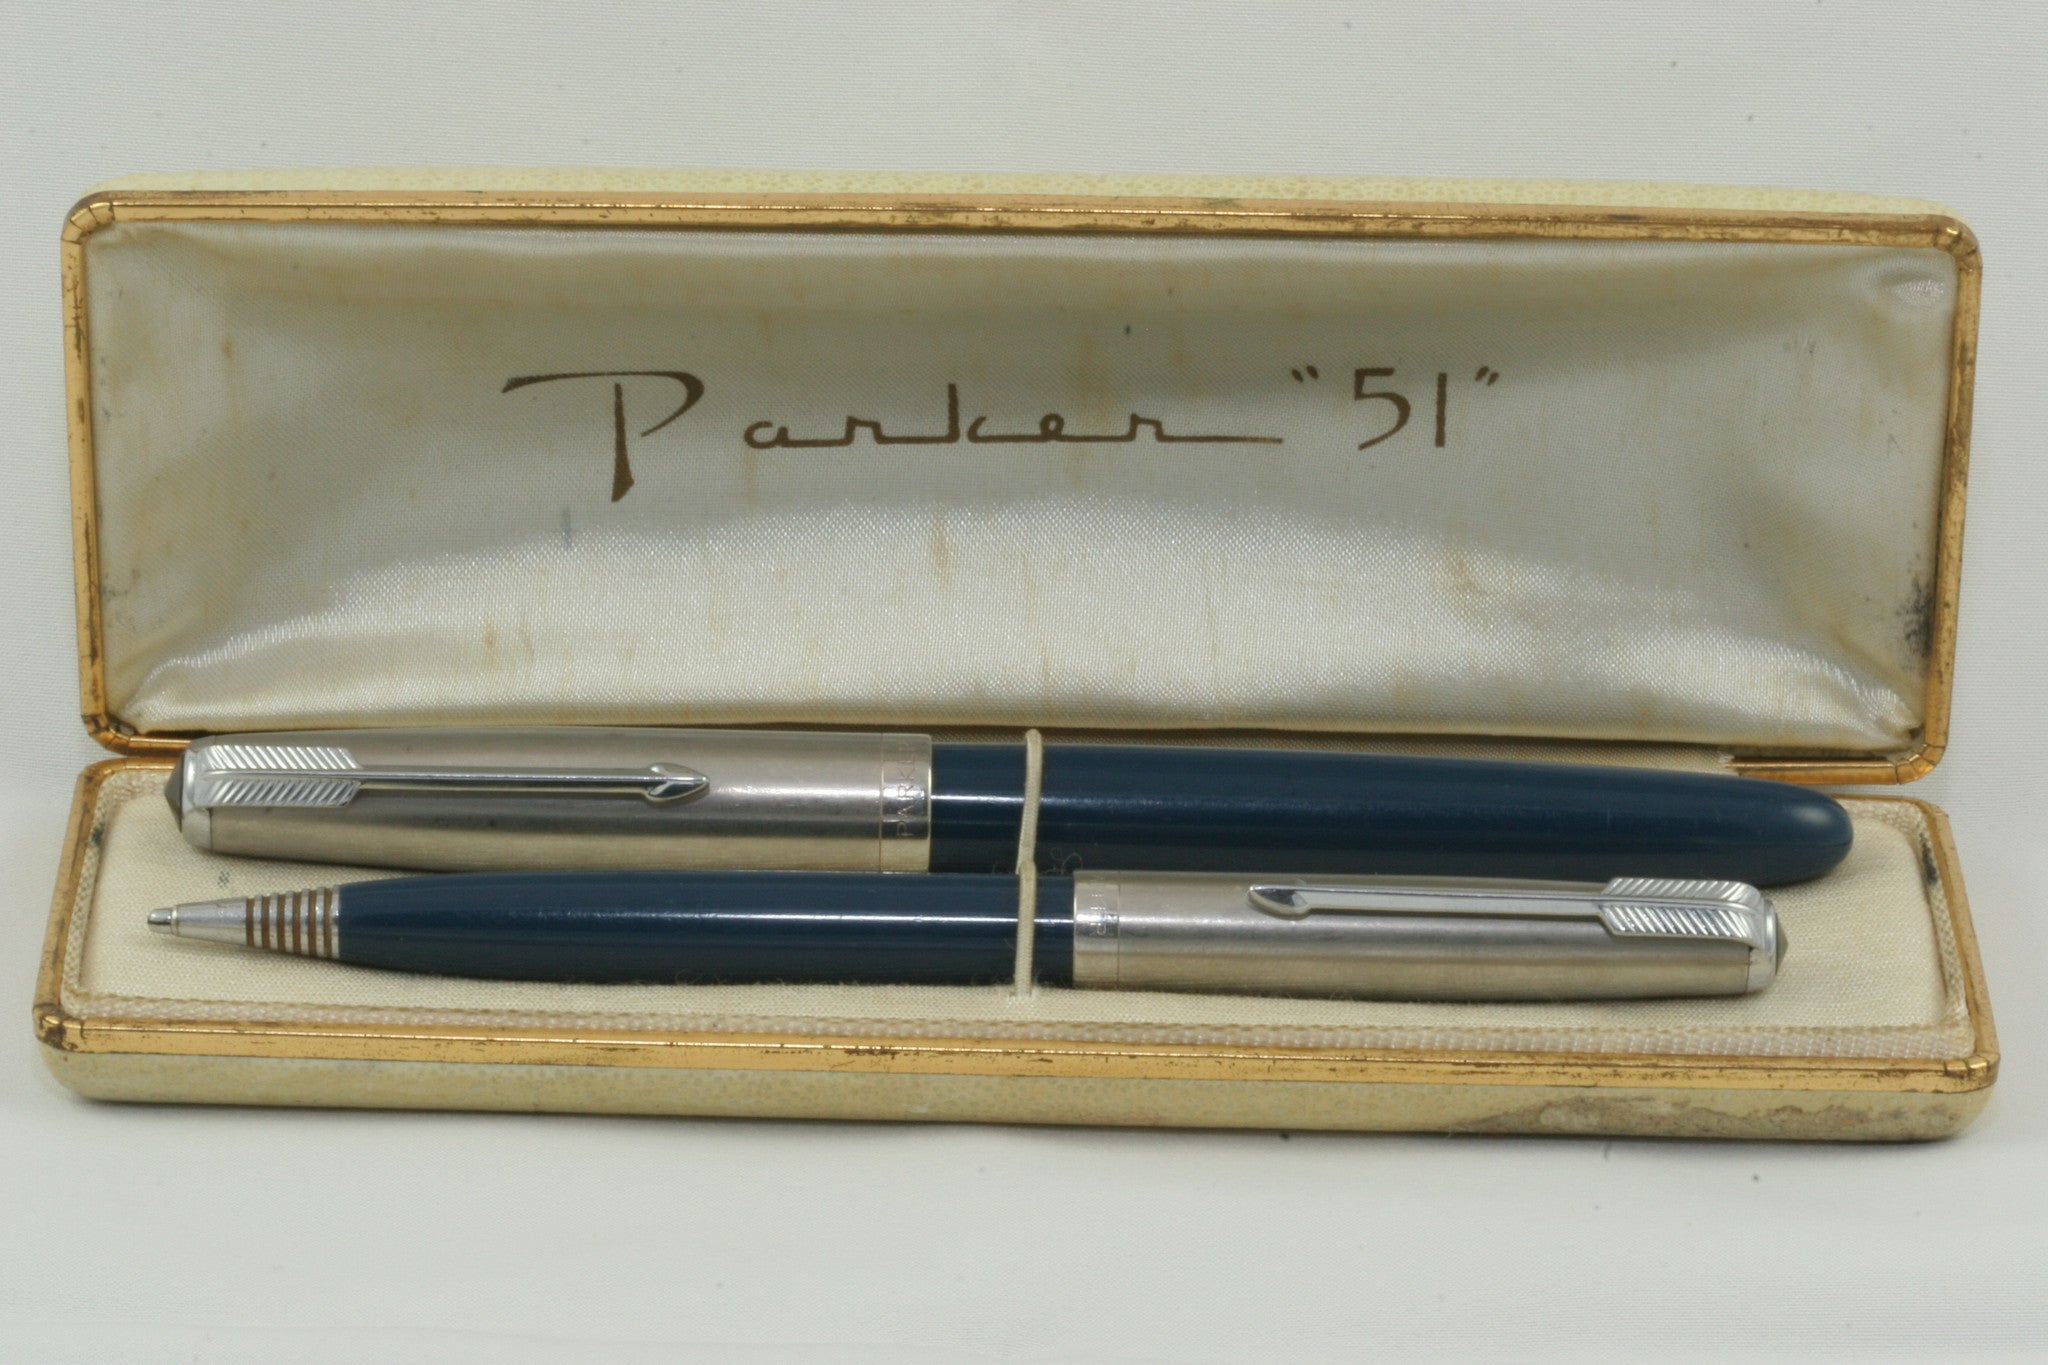 Parker 51 Aerometric Teal Blue Pen/Pencil Set Completely Restored & Working